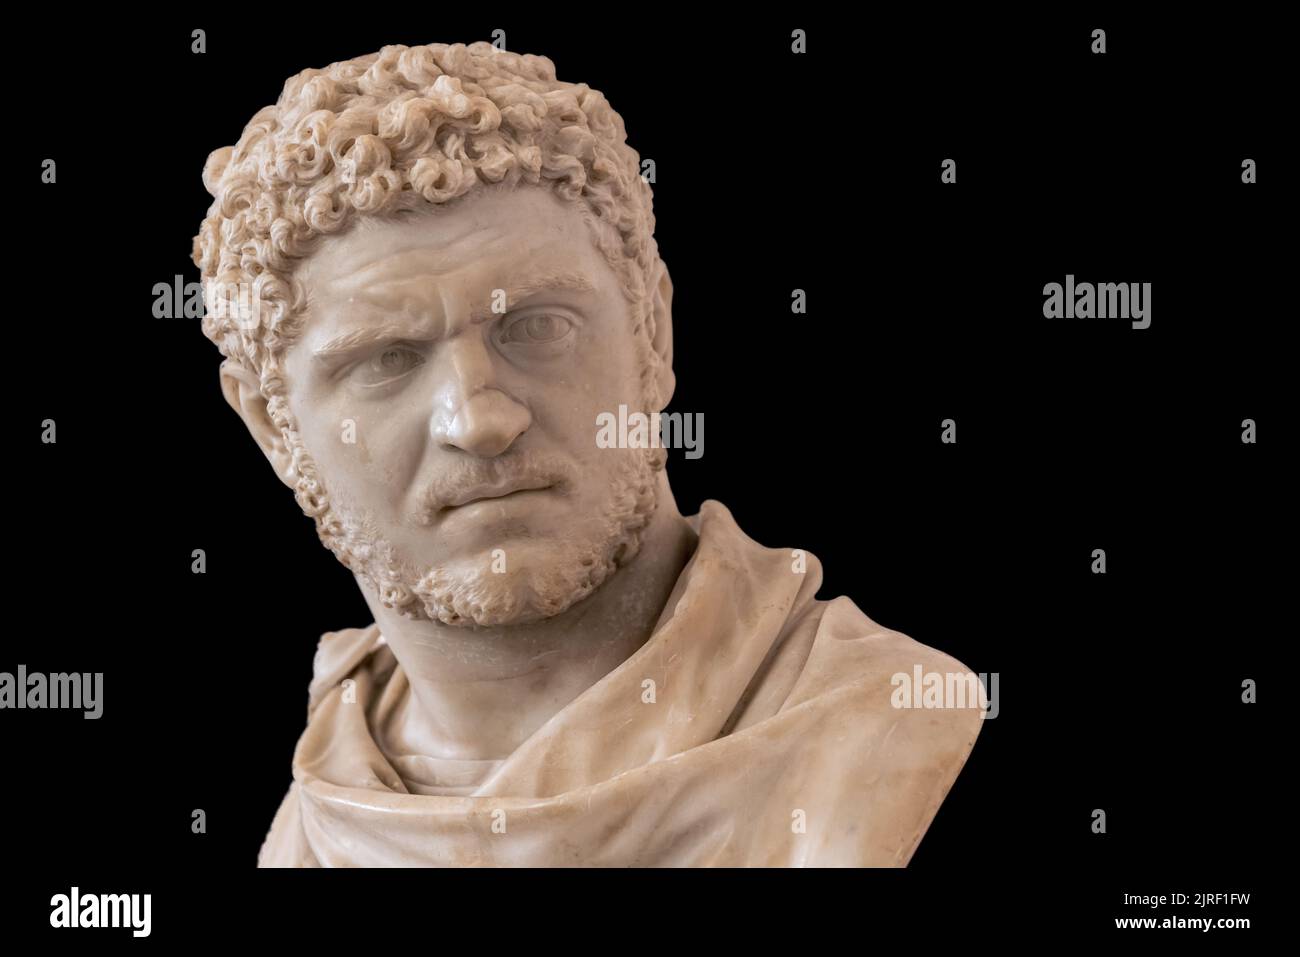 Close-up on ancient roman bust of grumpy mature man Stock Photo